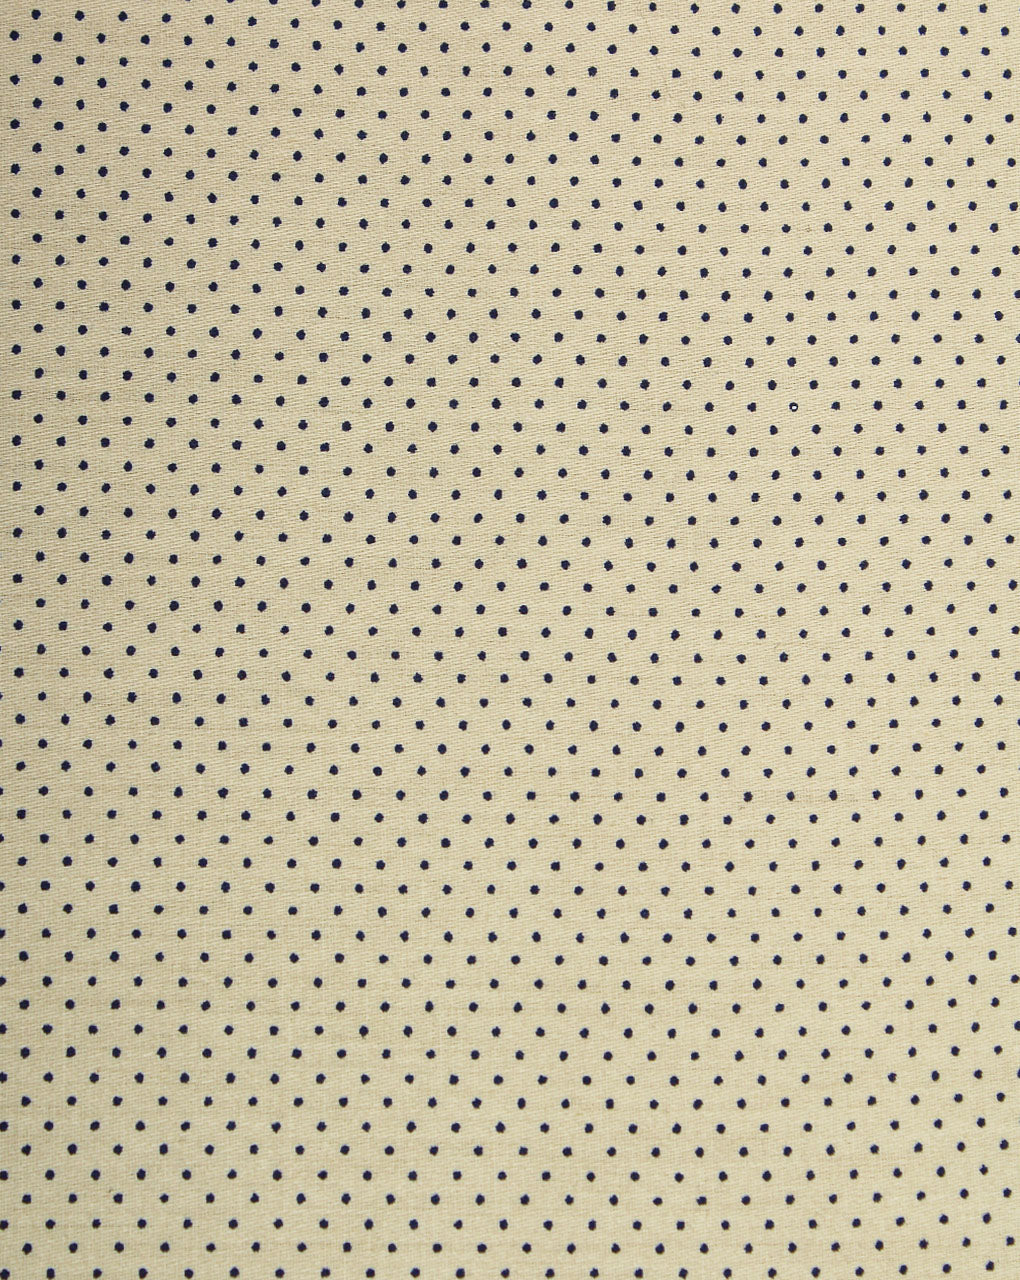 Cream And Black Polka Dot Design Cotton Print Fabric